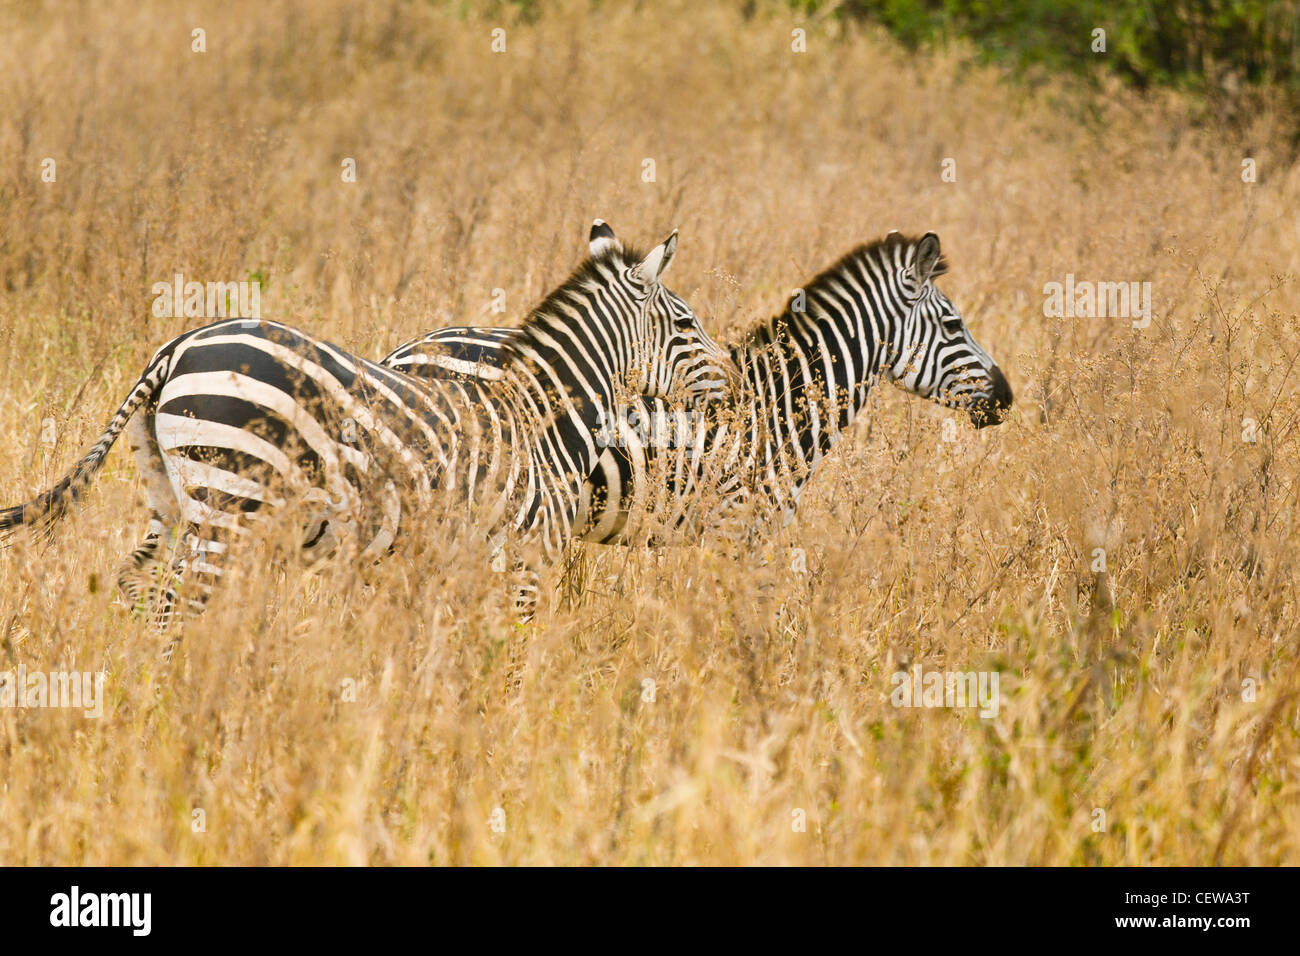 Two zebra walking through grass  in Tanzania, Africa. Stock Photo